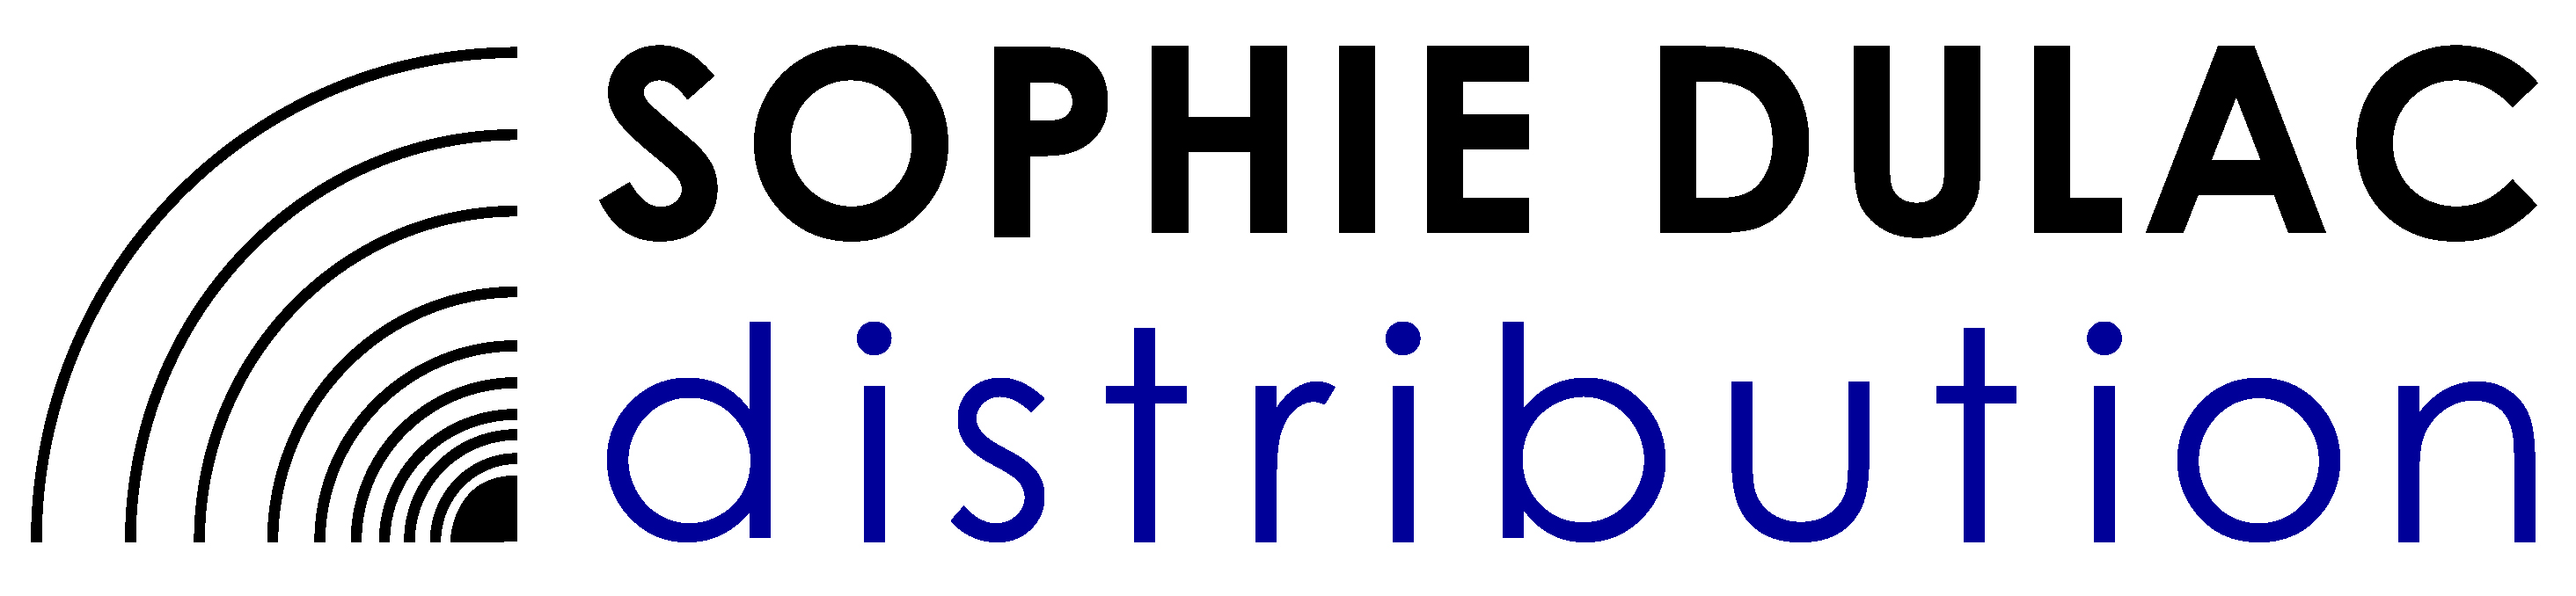 sophie-dulac-distribution-logo